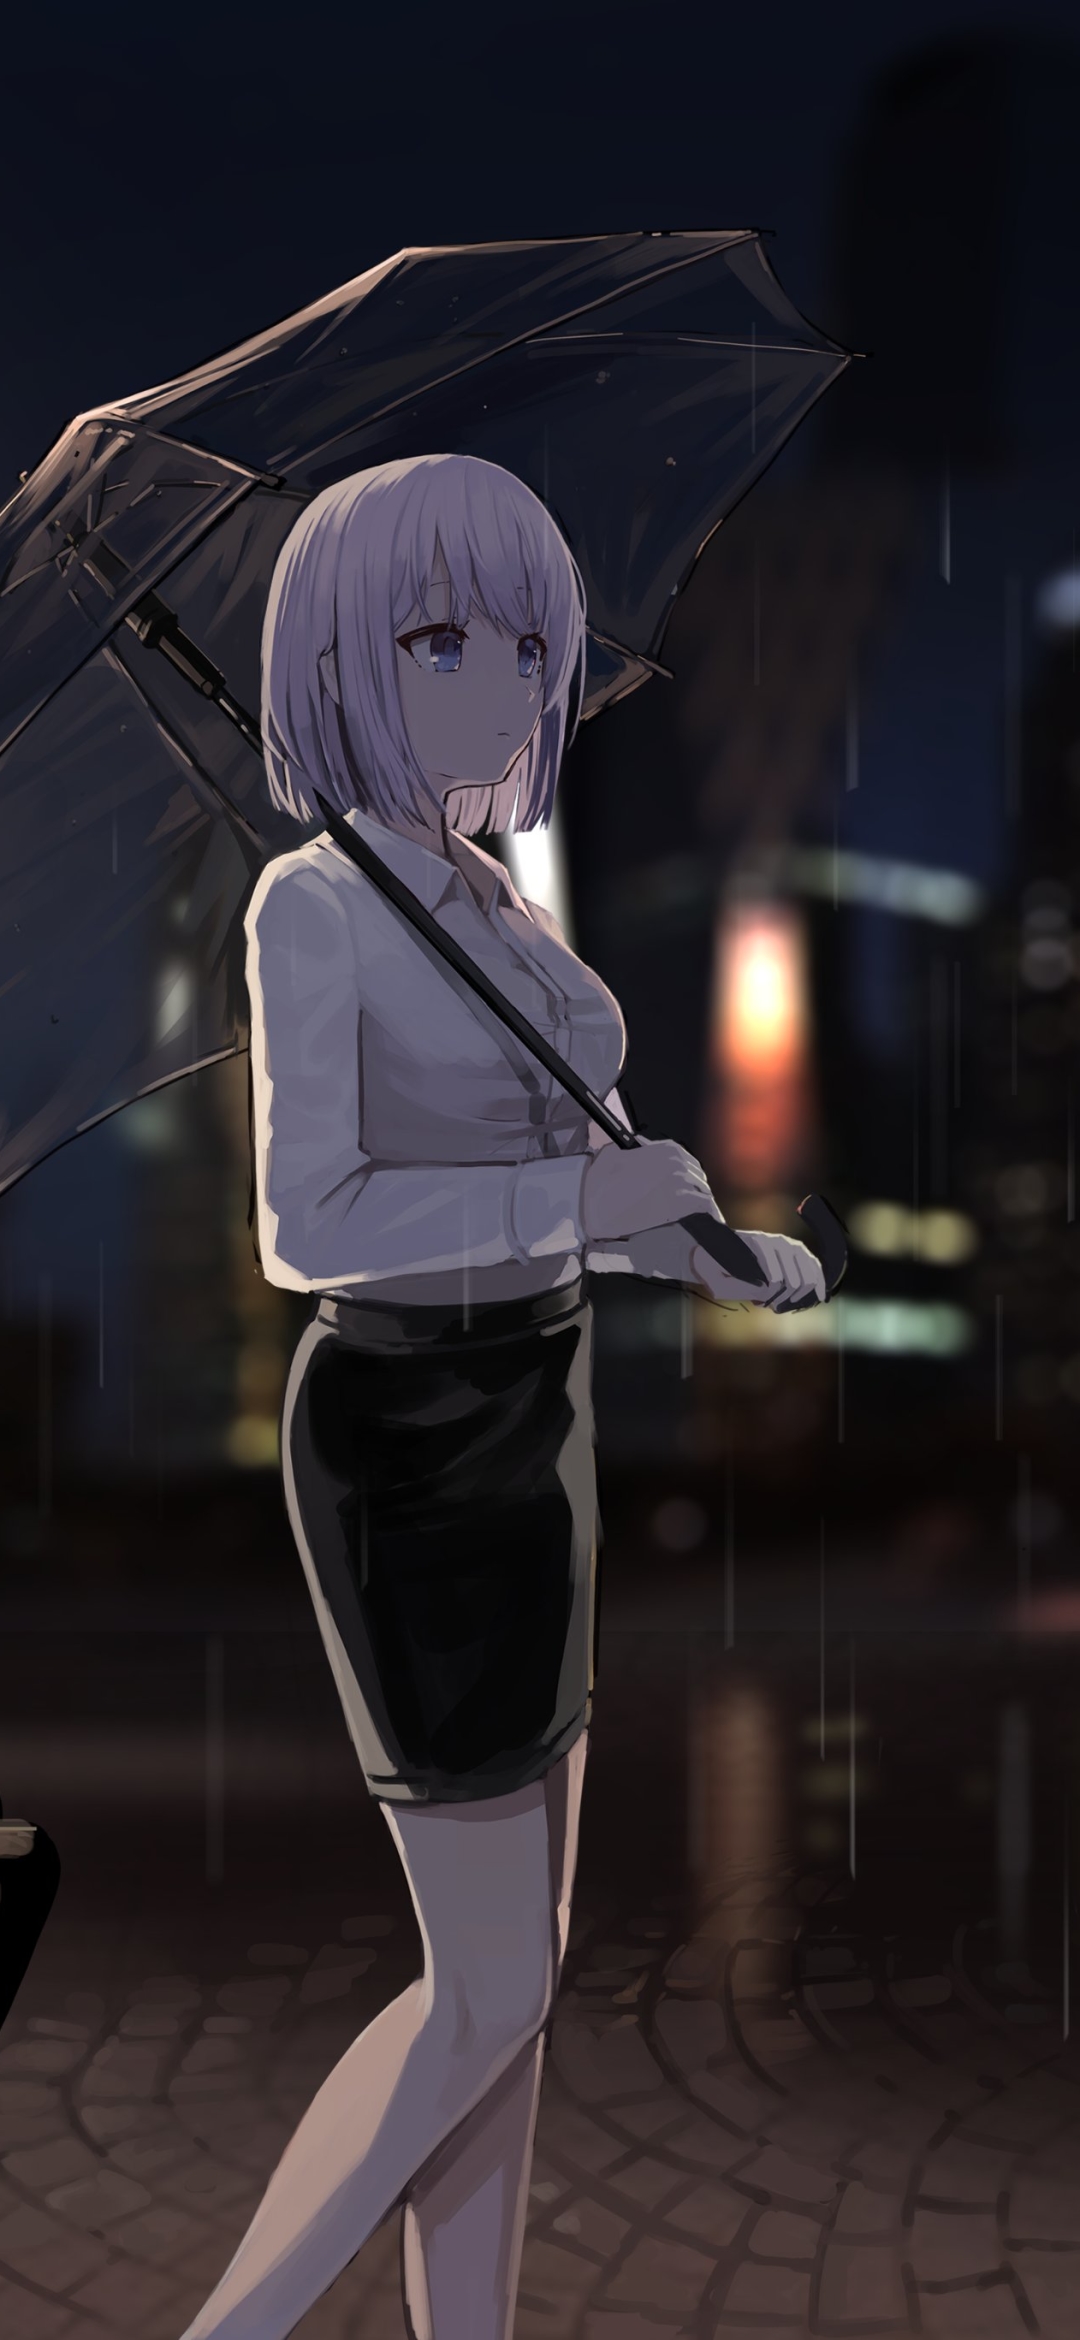 Anime girl with umbrella mobile wallpaper